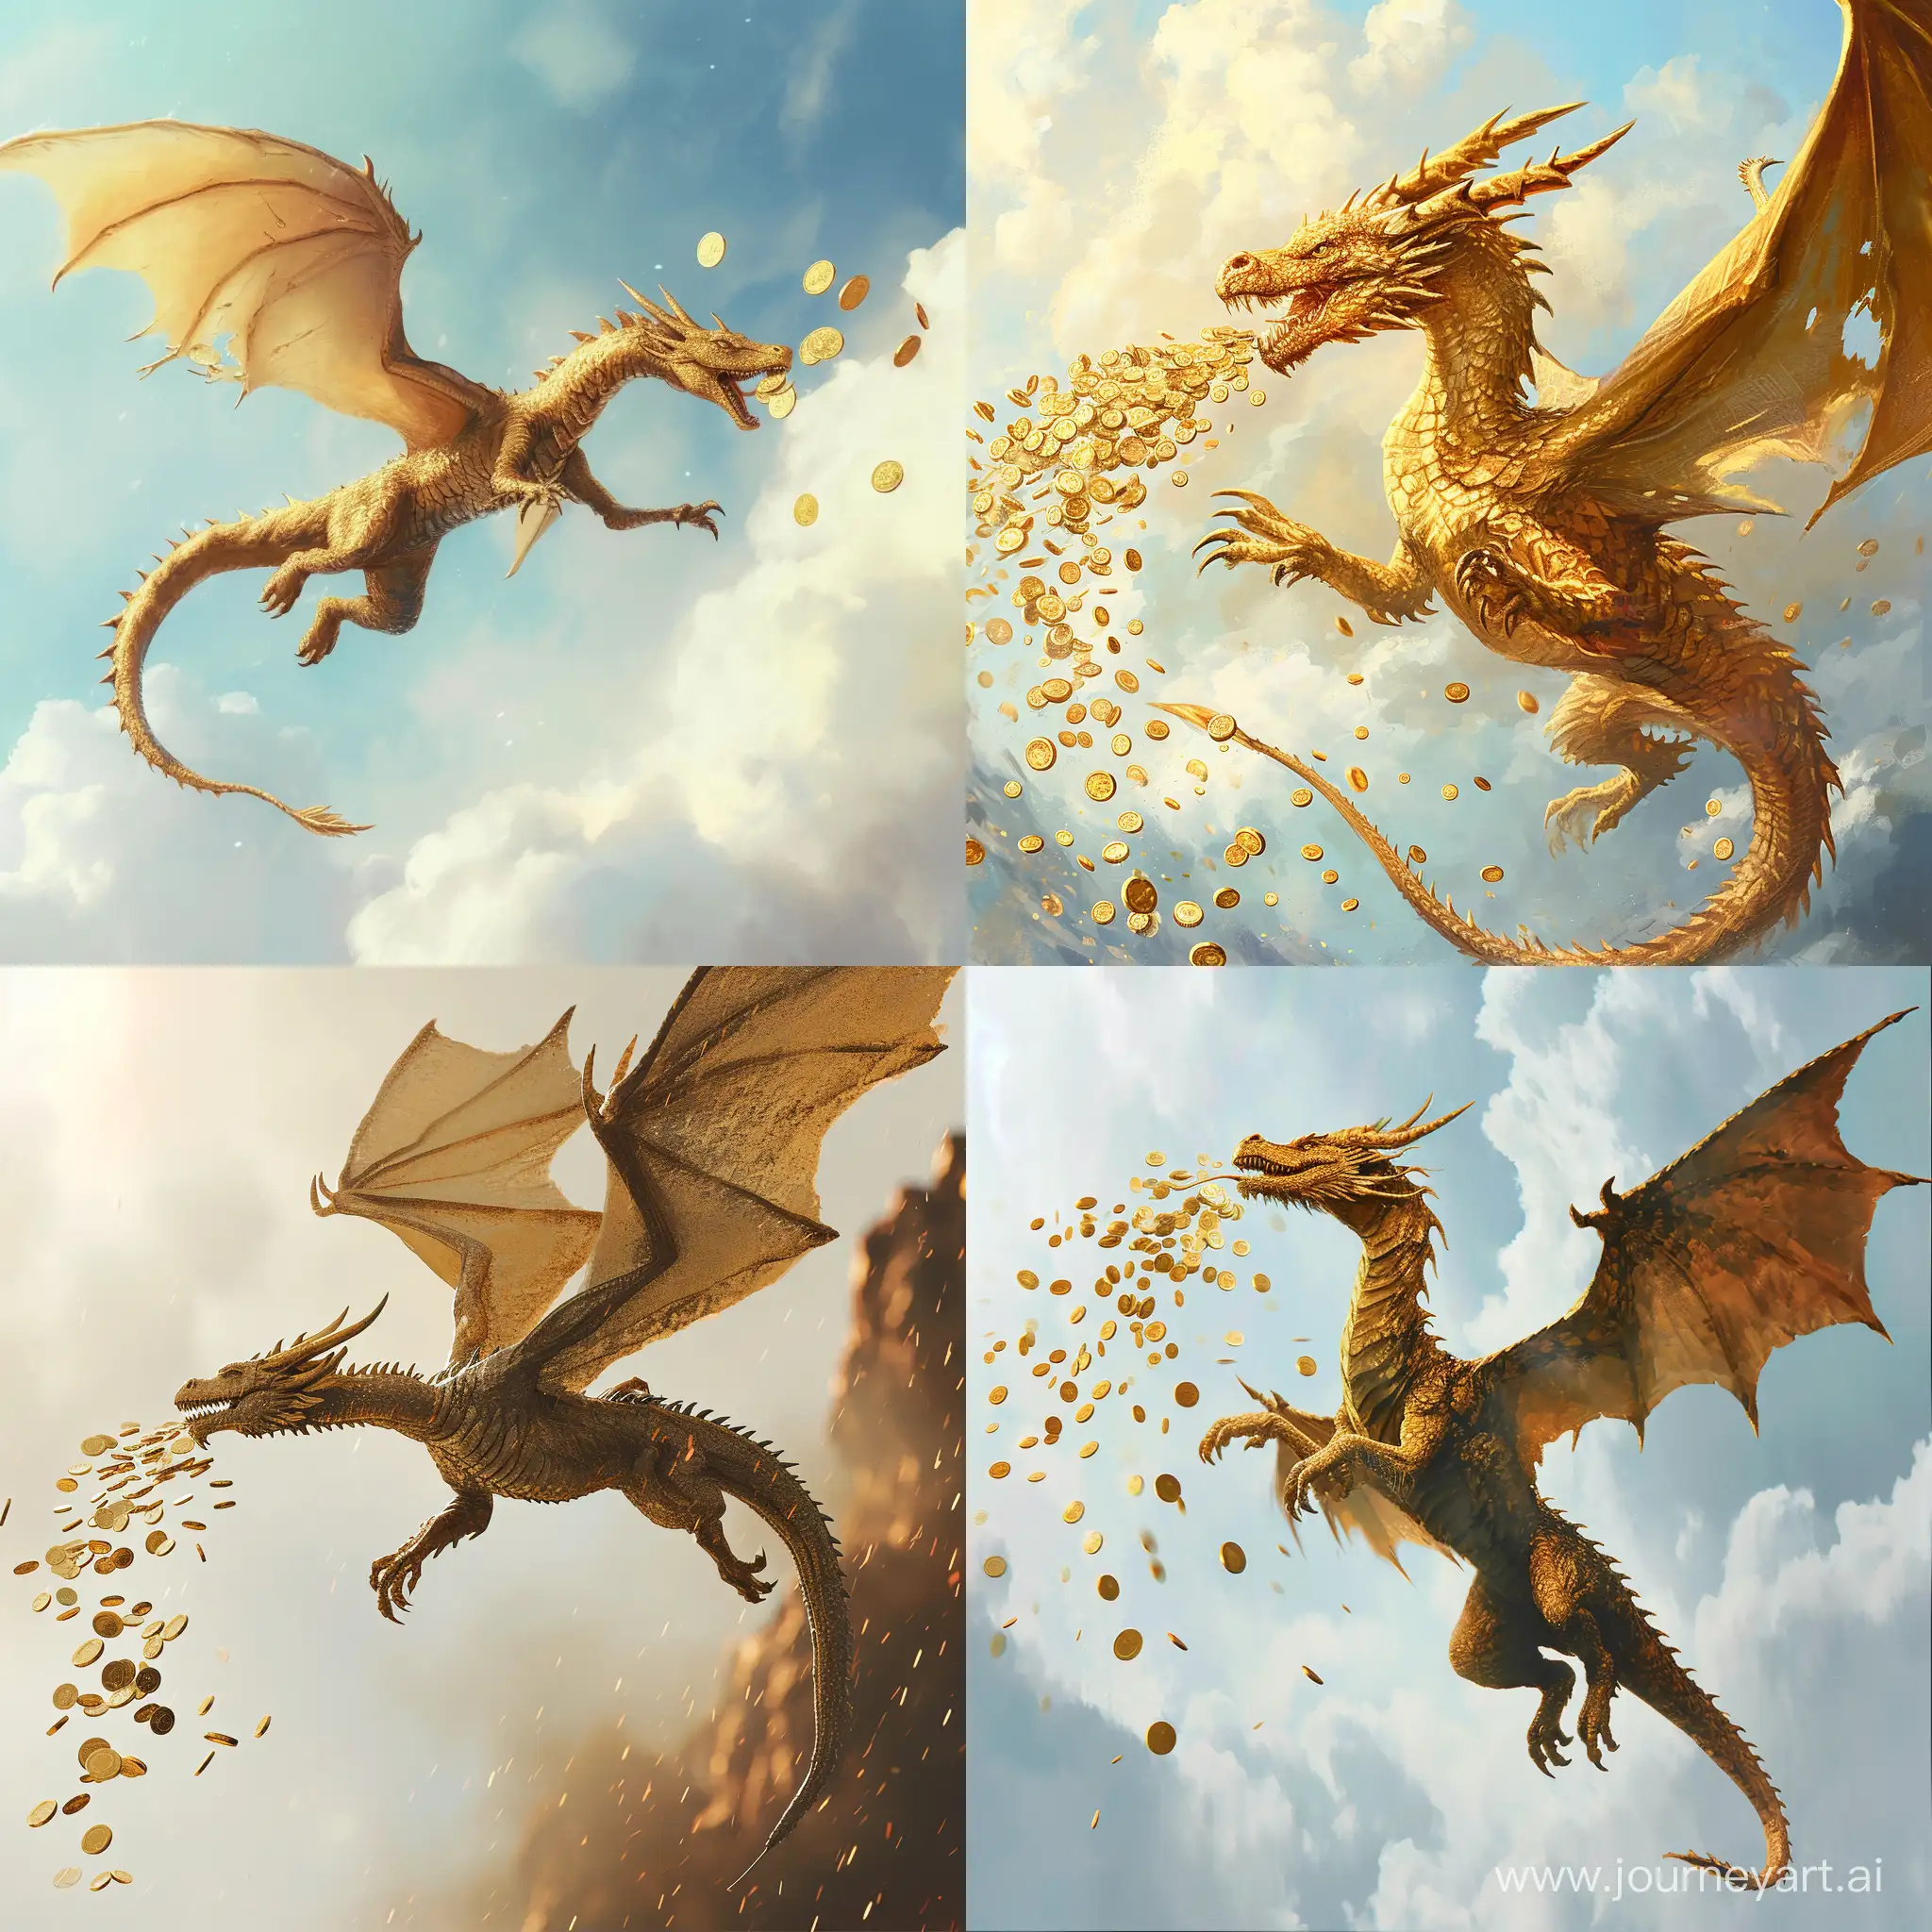 Majestic-Golden-Dragon-Soaring-in-Vanilla-Sky-Showering-Gold-Coins